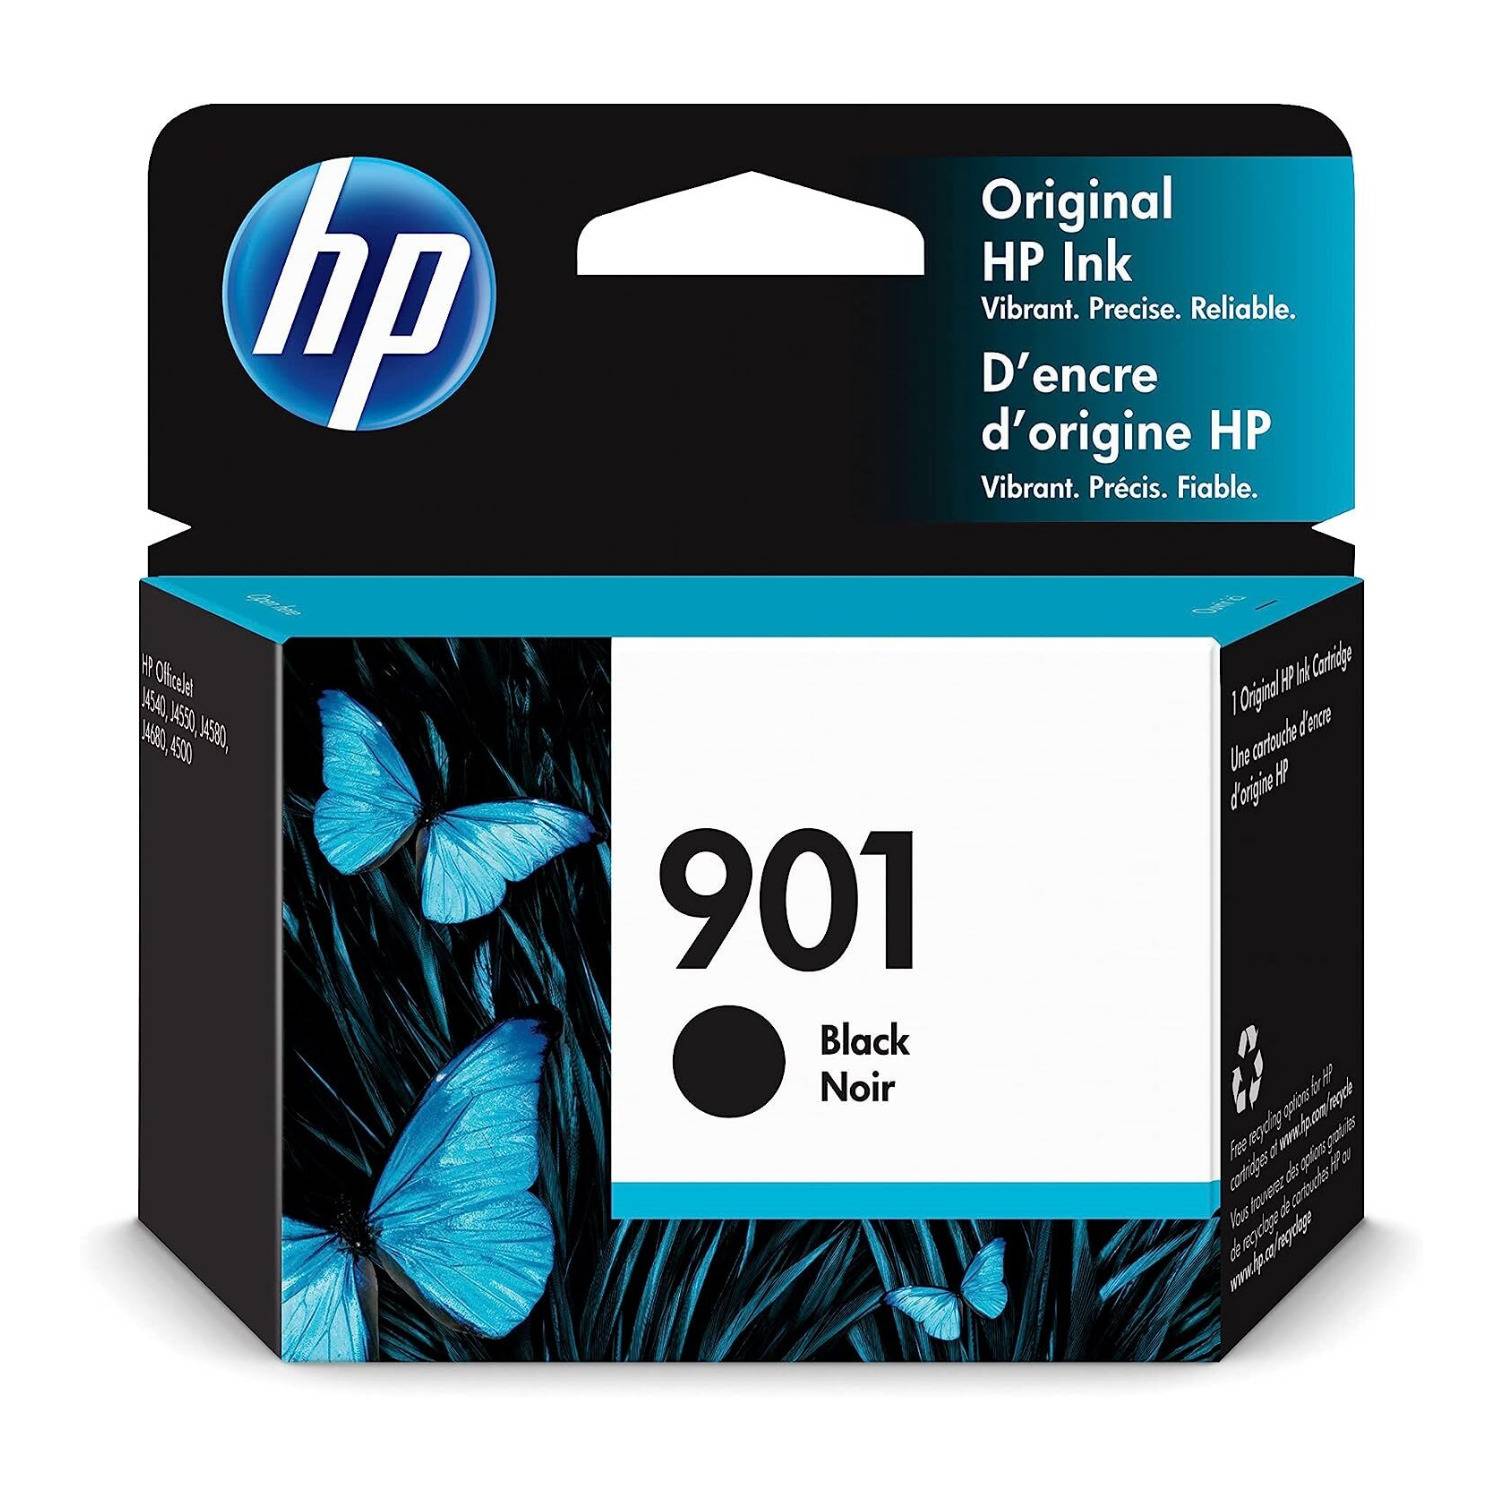 HP 901 Black Original Standard Inkjet Ink Cartridge with 2x More Prints (200 Pages)